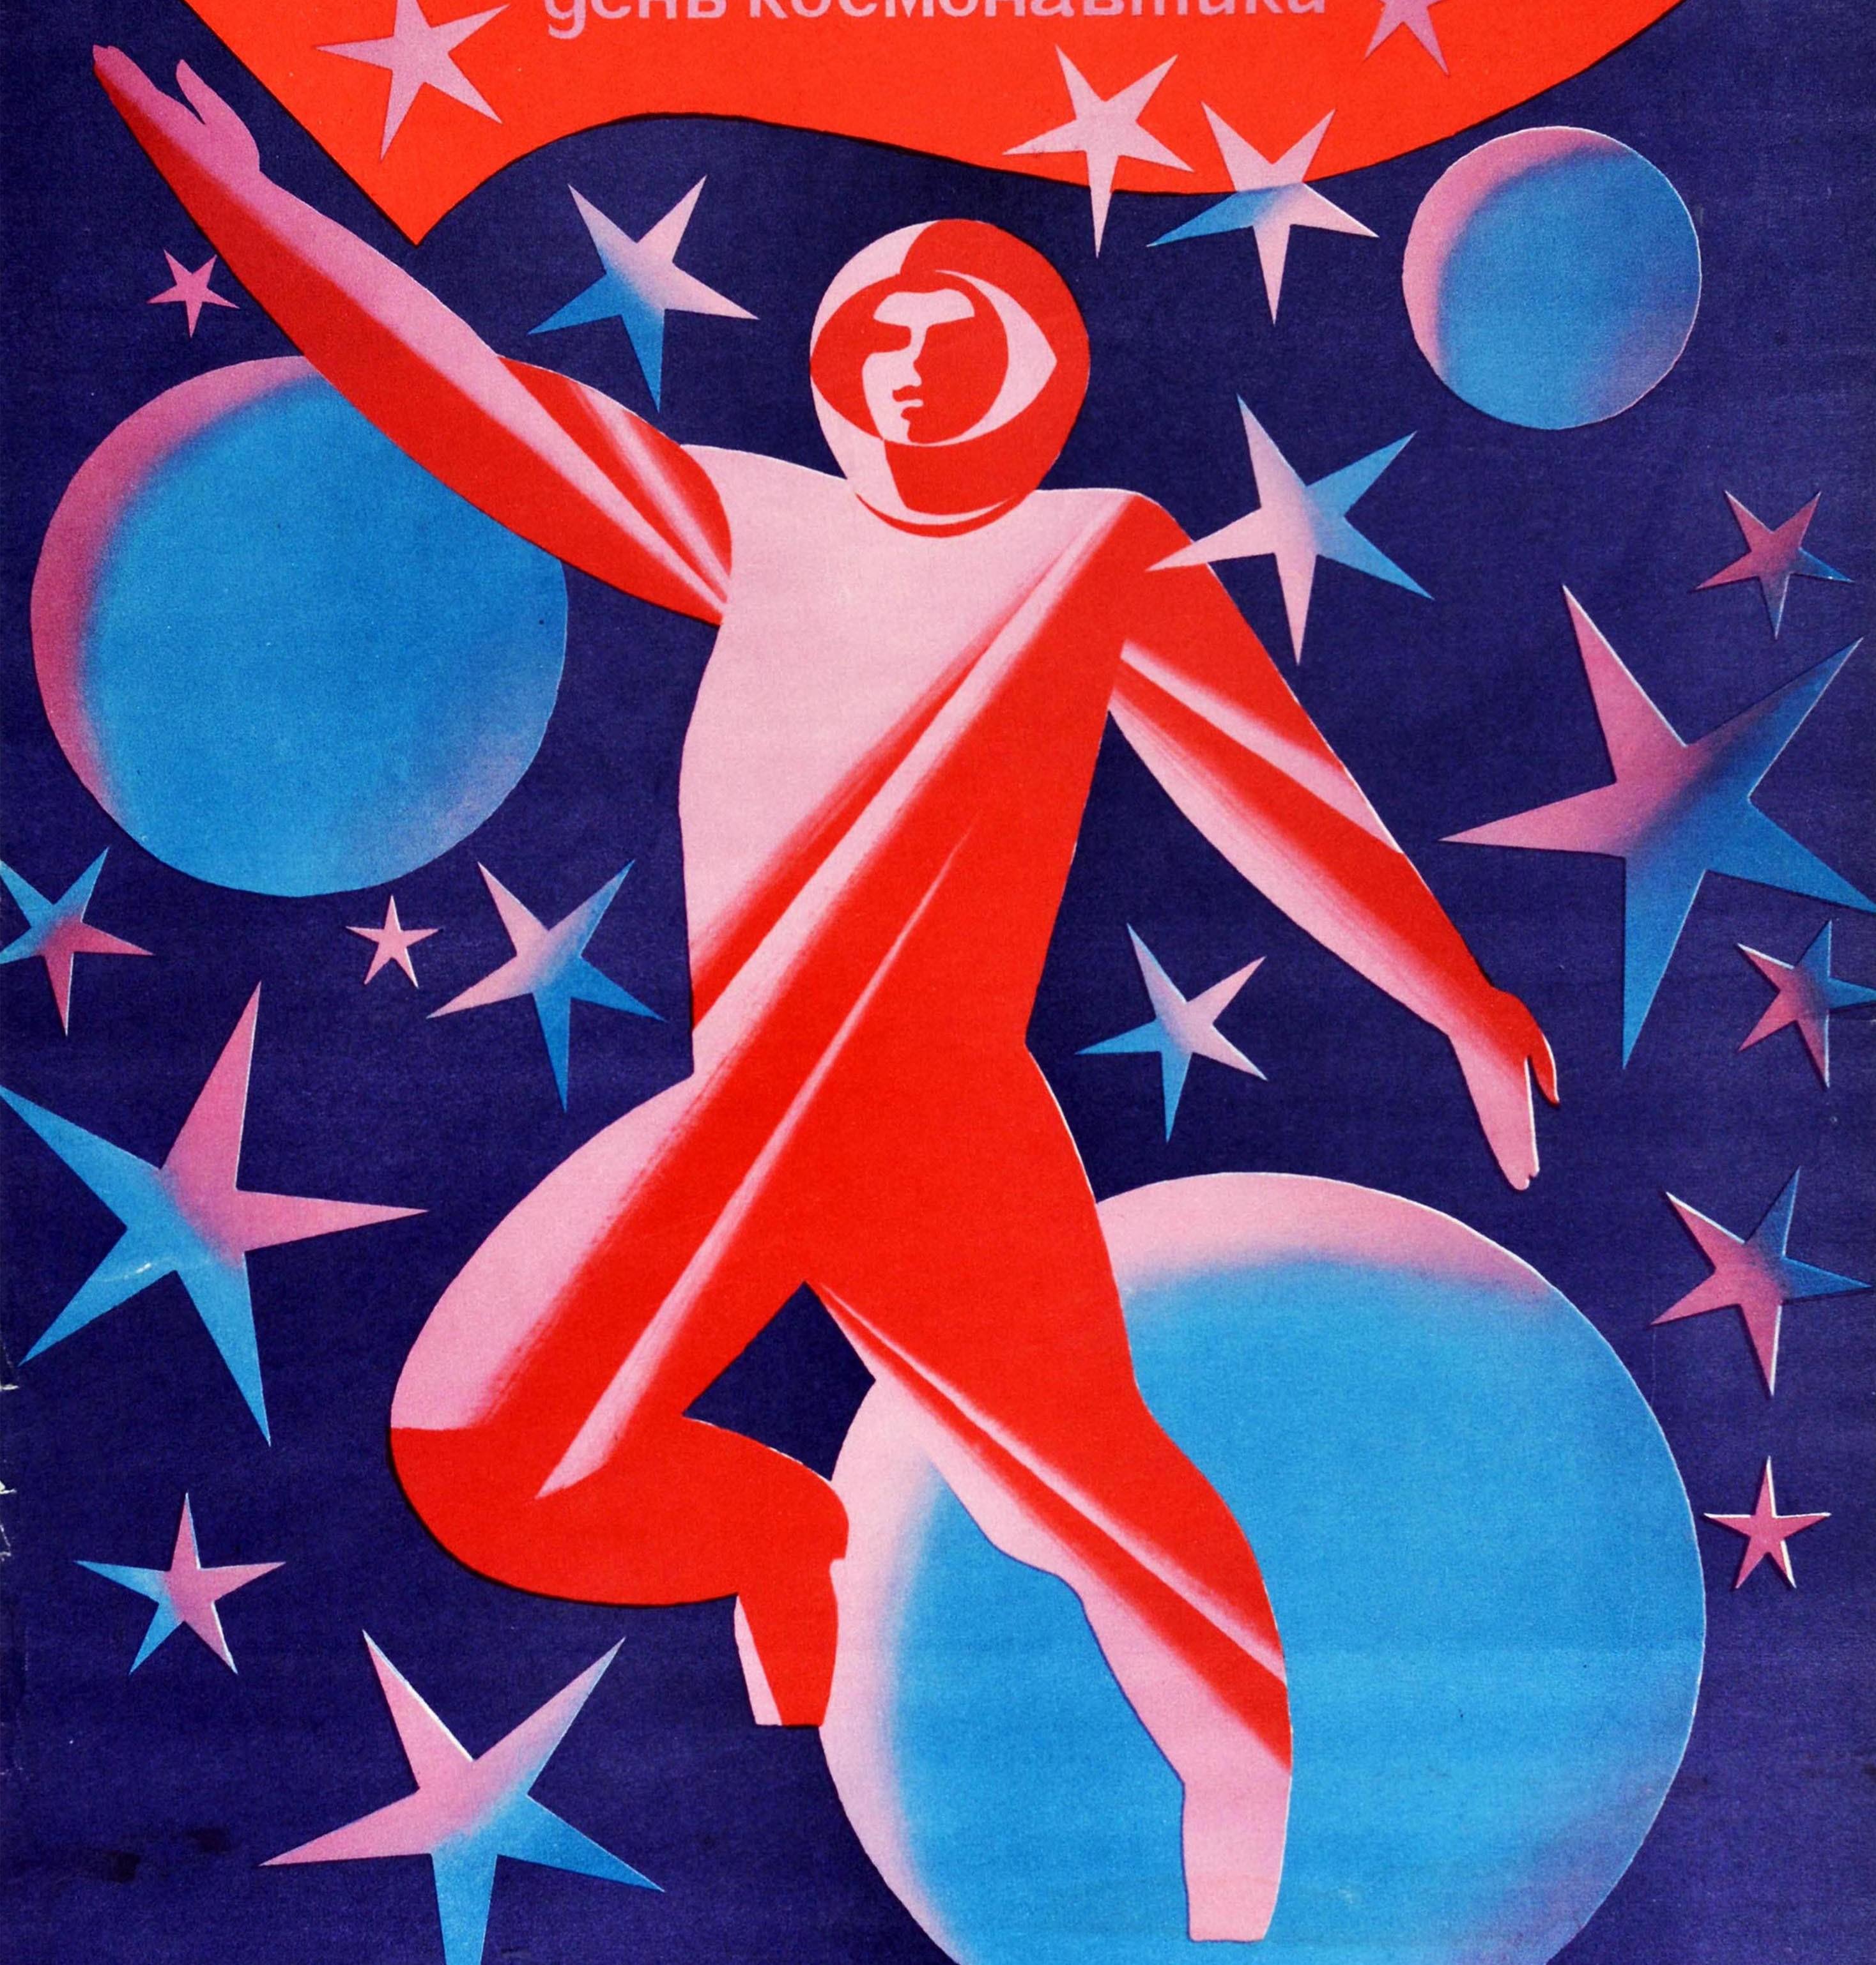 Original Vintage Poster Cosmonautics Day 12 April USSR Space Exploration Gagarin - Purple Print by Ostrovskiy